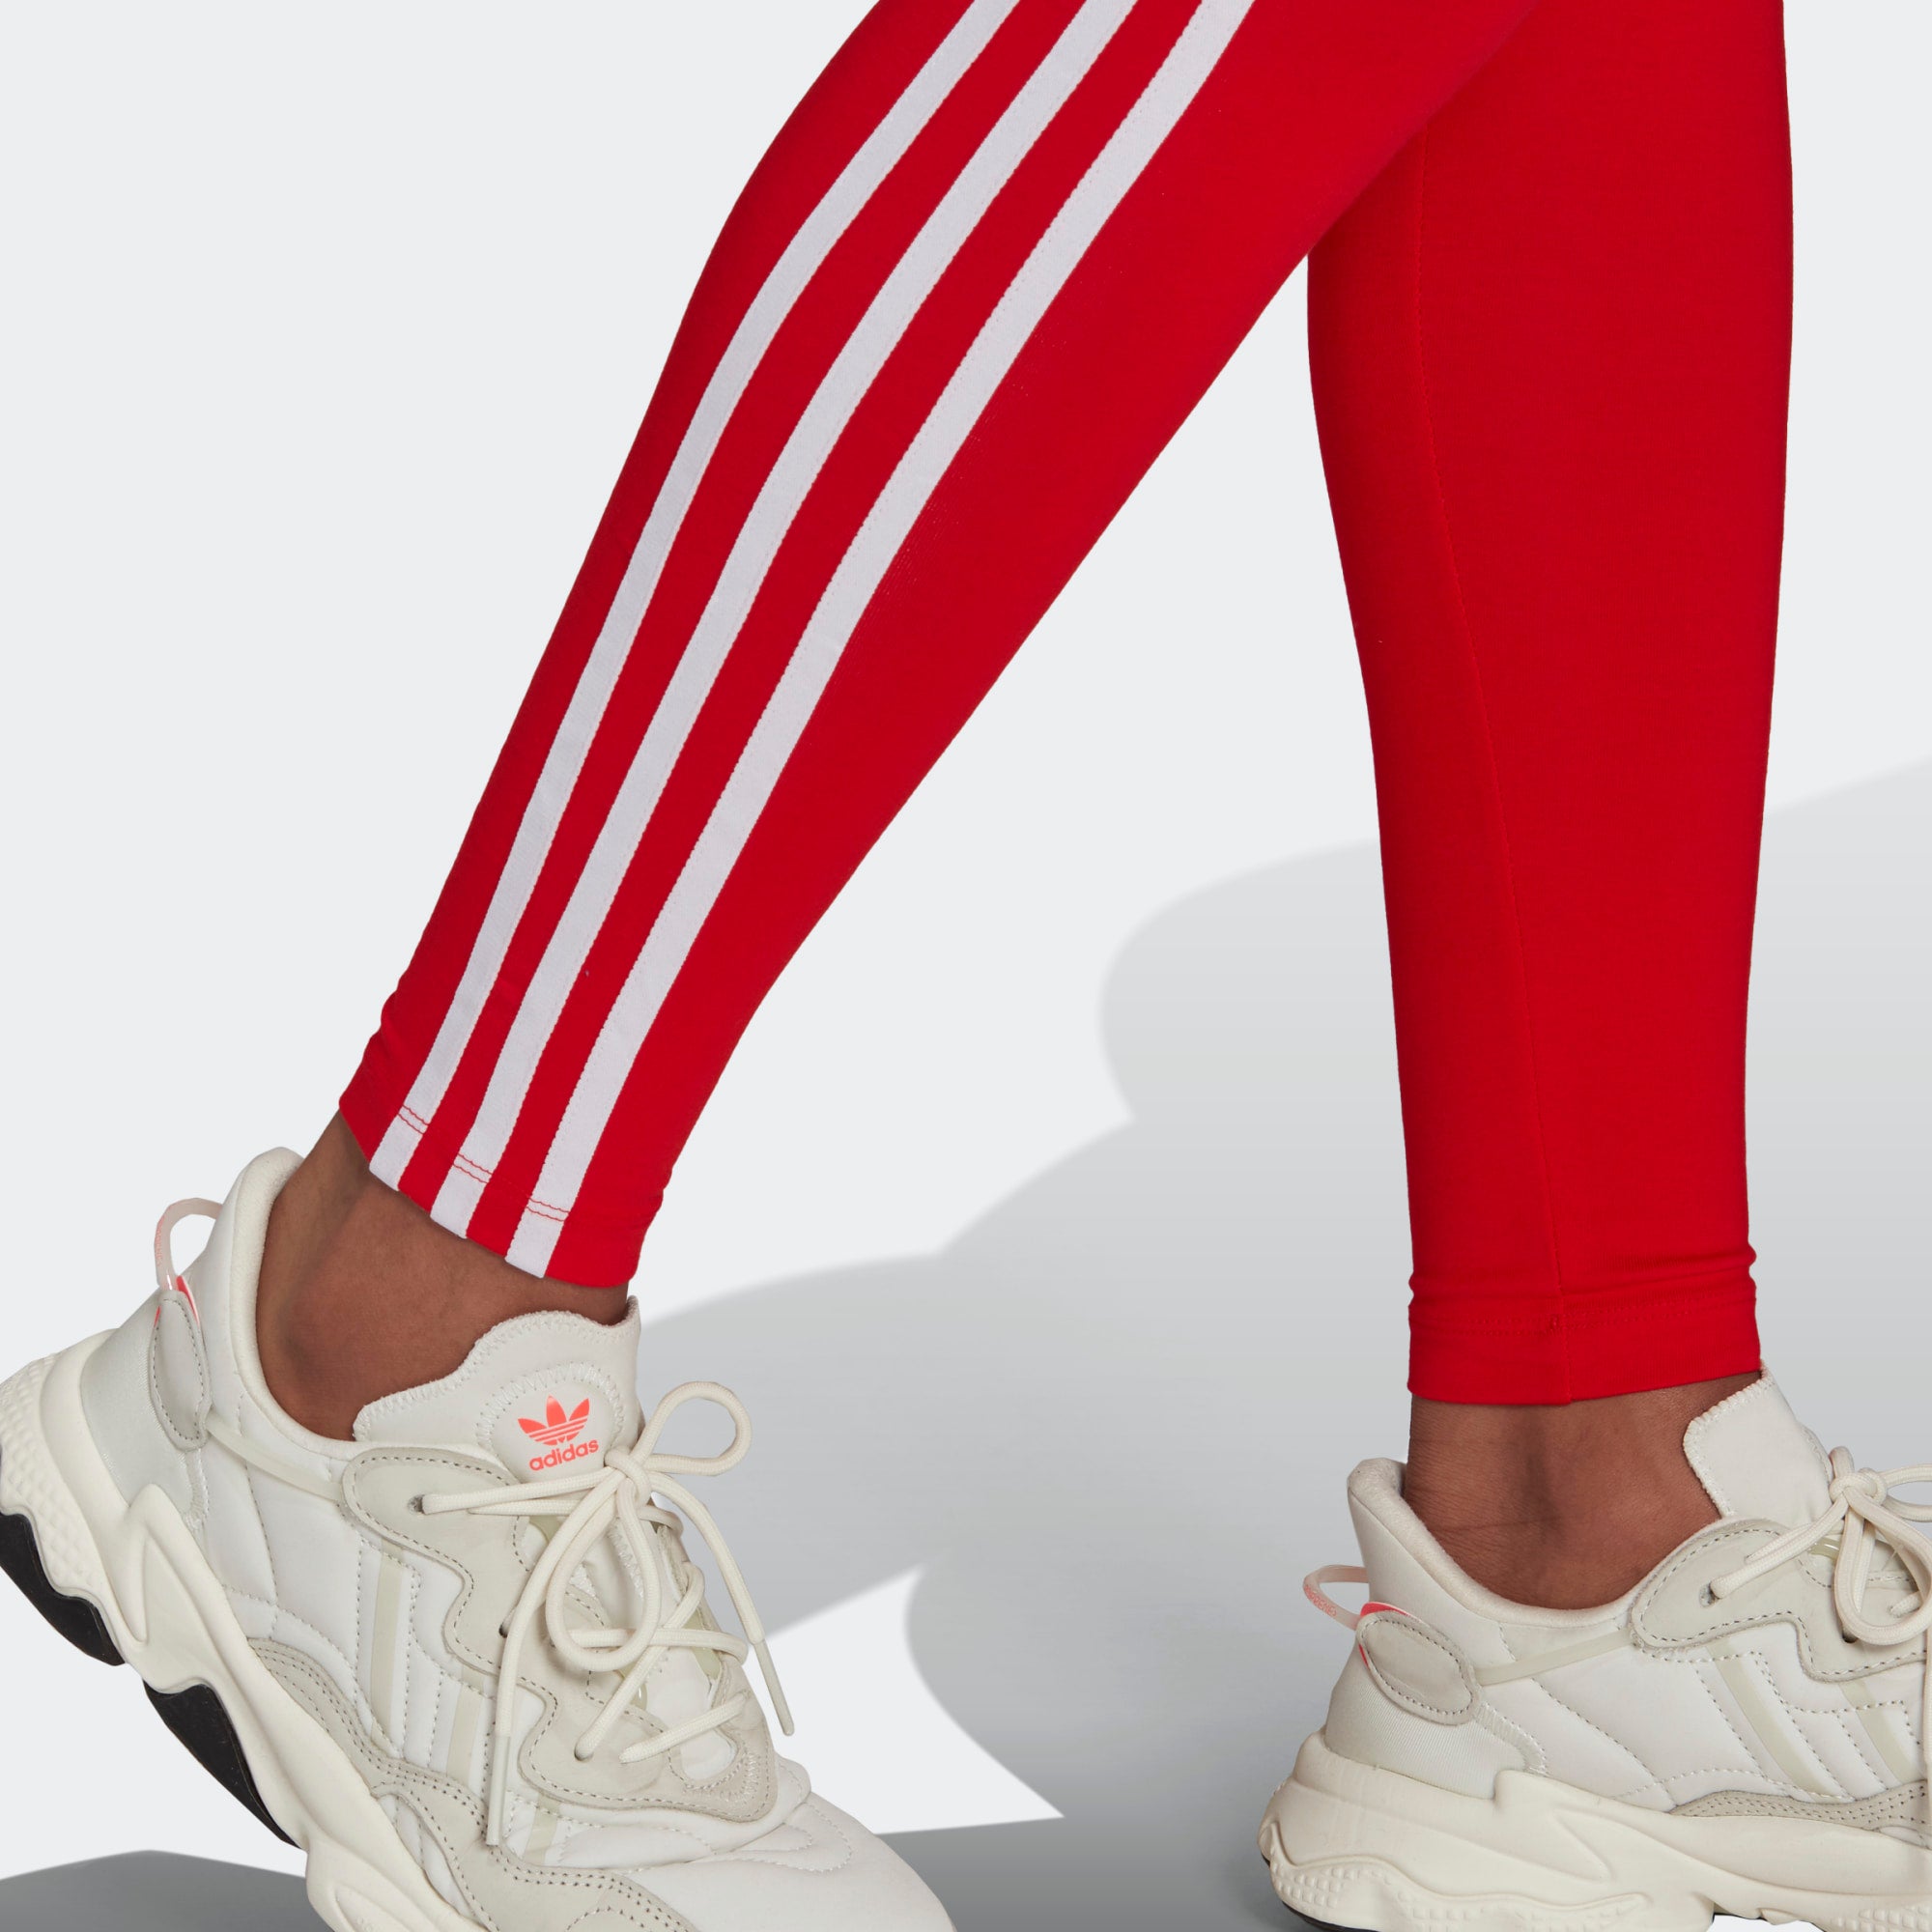 Buy the Adidas Red w/ White Stripe Leggings Size M/A NWT